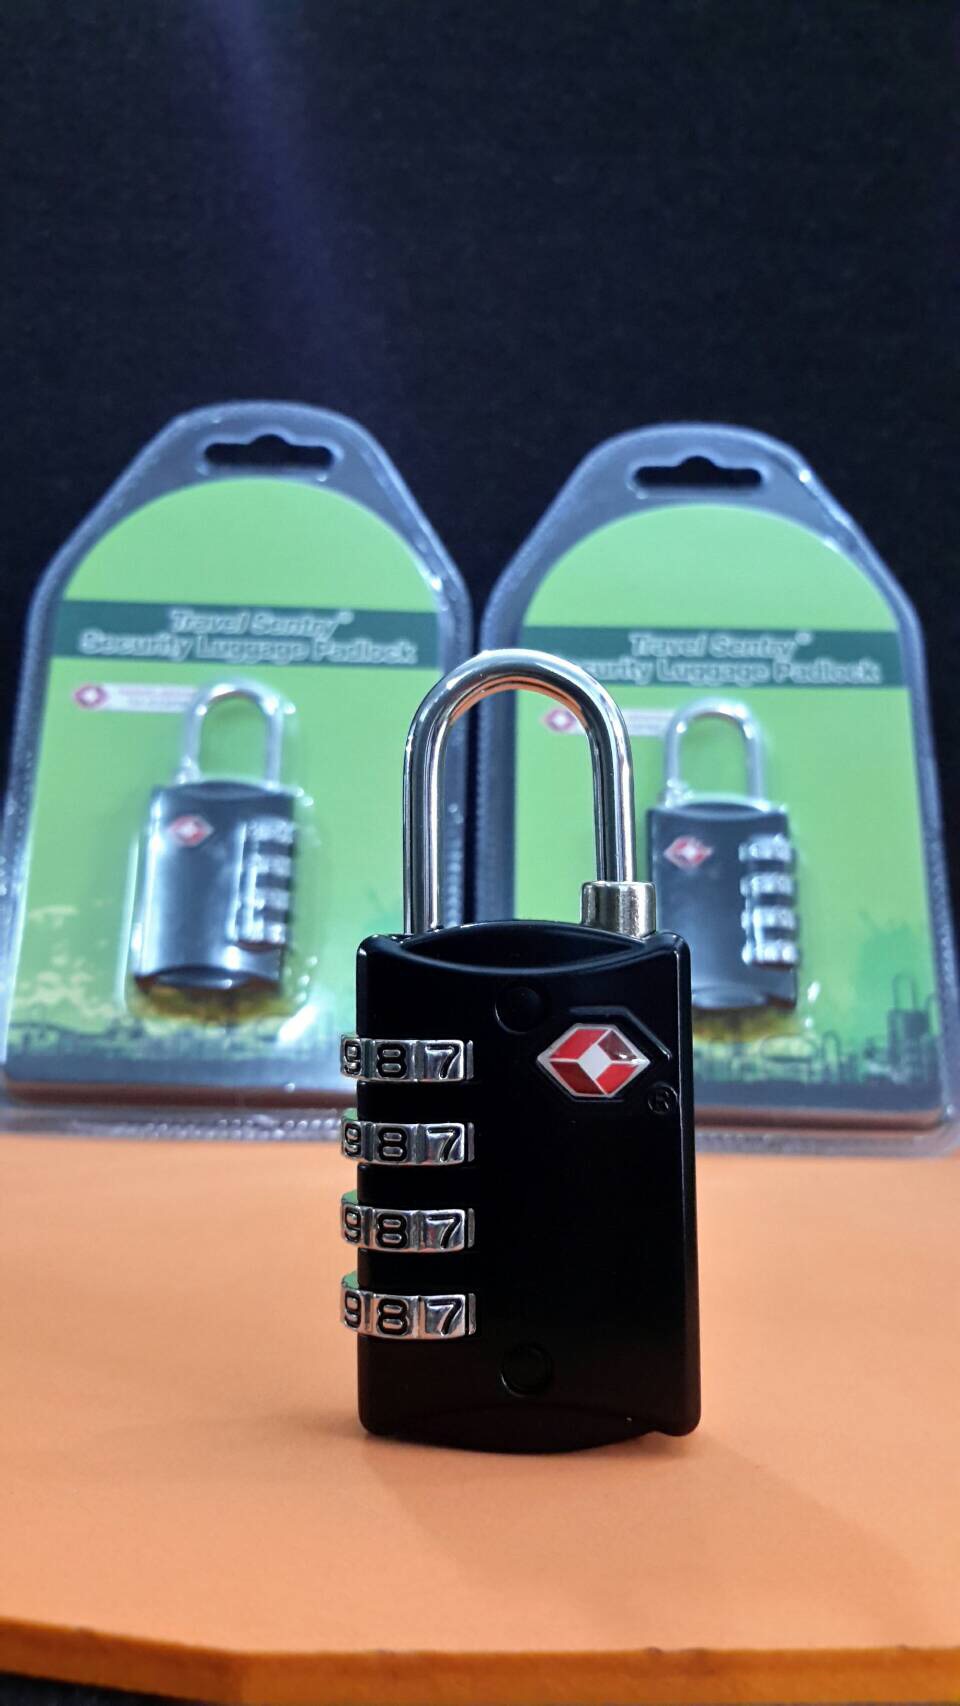 SOLEX Travel Lock กุญแจ ตั้งรหัส 4 เลข มาตรฐาน TSA ล็อคกระเป๋าเดินทาง